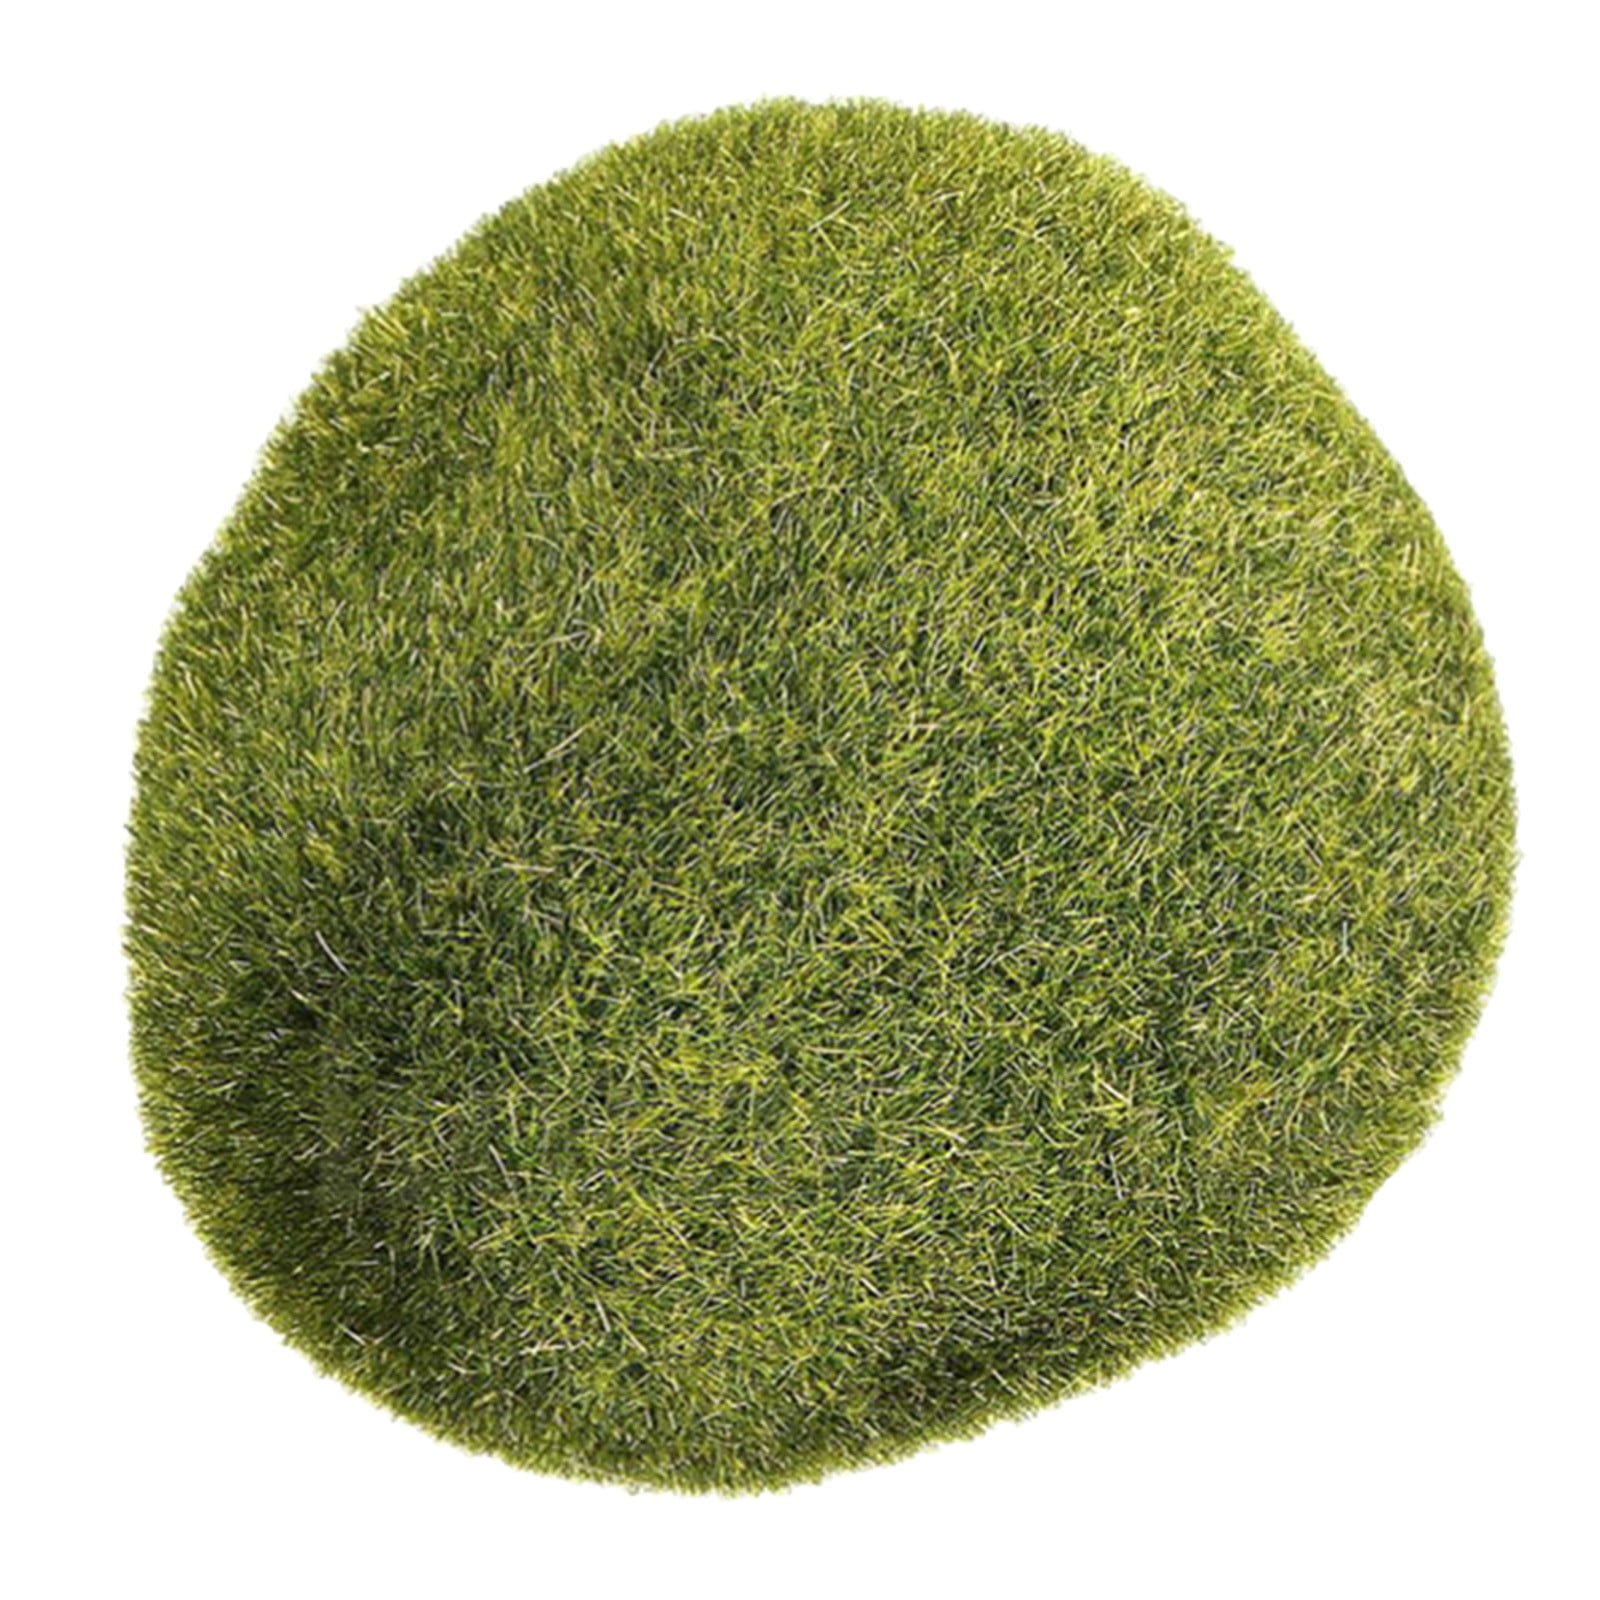 Heiheiup Moss Artificial Moss For Potted Greenery Moss Home Decor